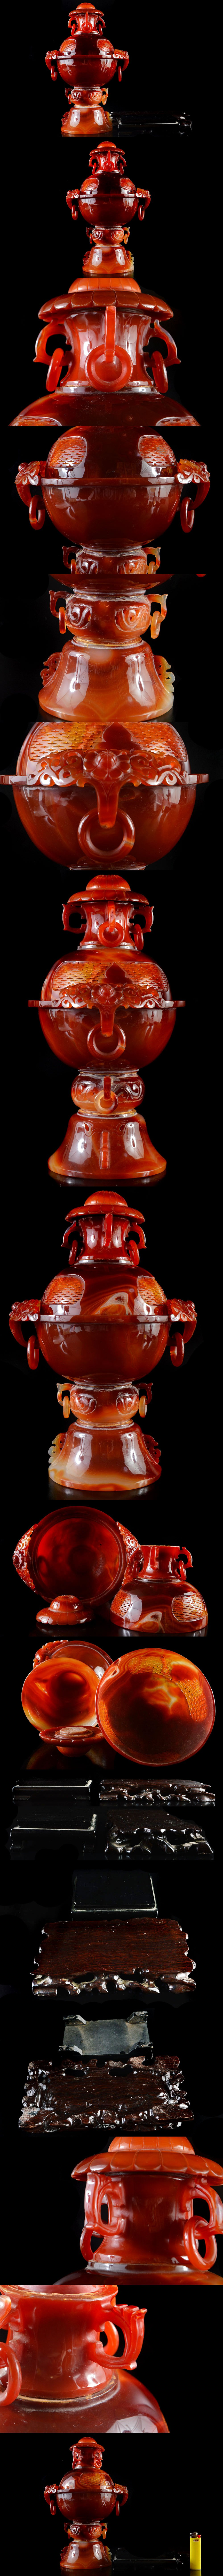 売り本物仏教美術 中国古玩 唐物 玉瑪瑙 花彫刻香炉 高さ32cm 古美術品 (旧家蔵出)A841 LTDnbq8d オブジェ